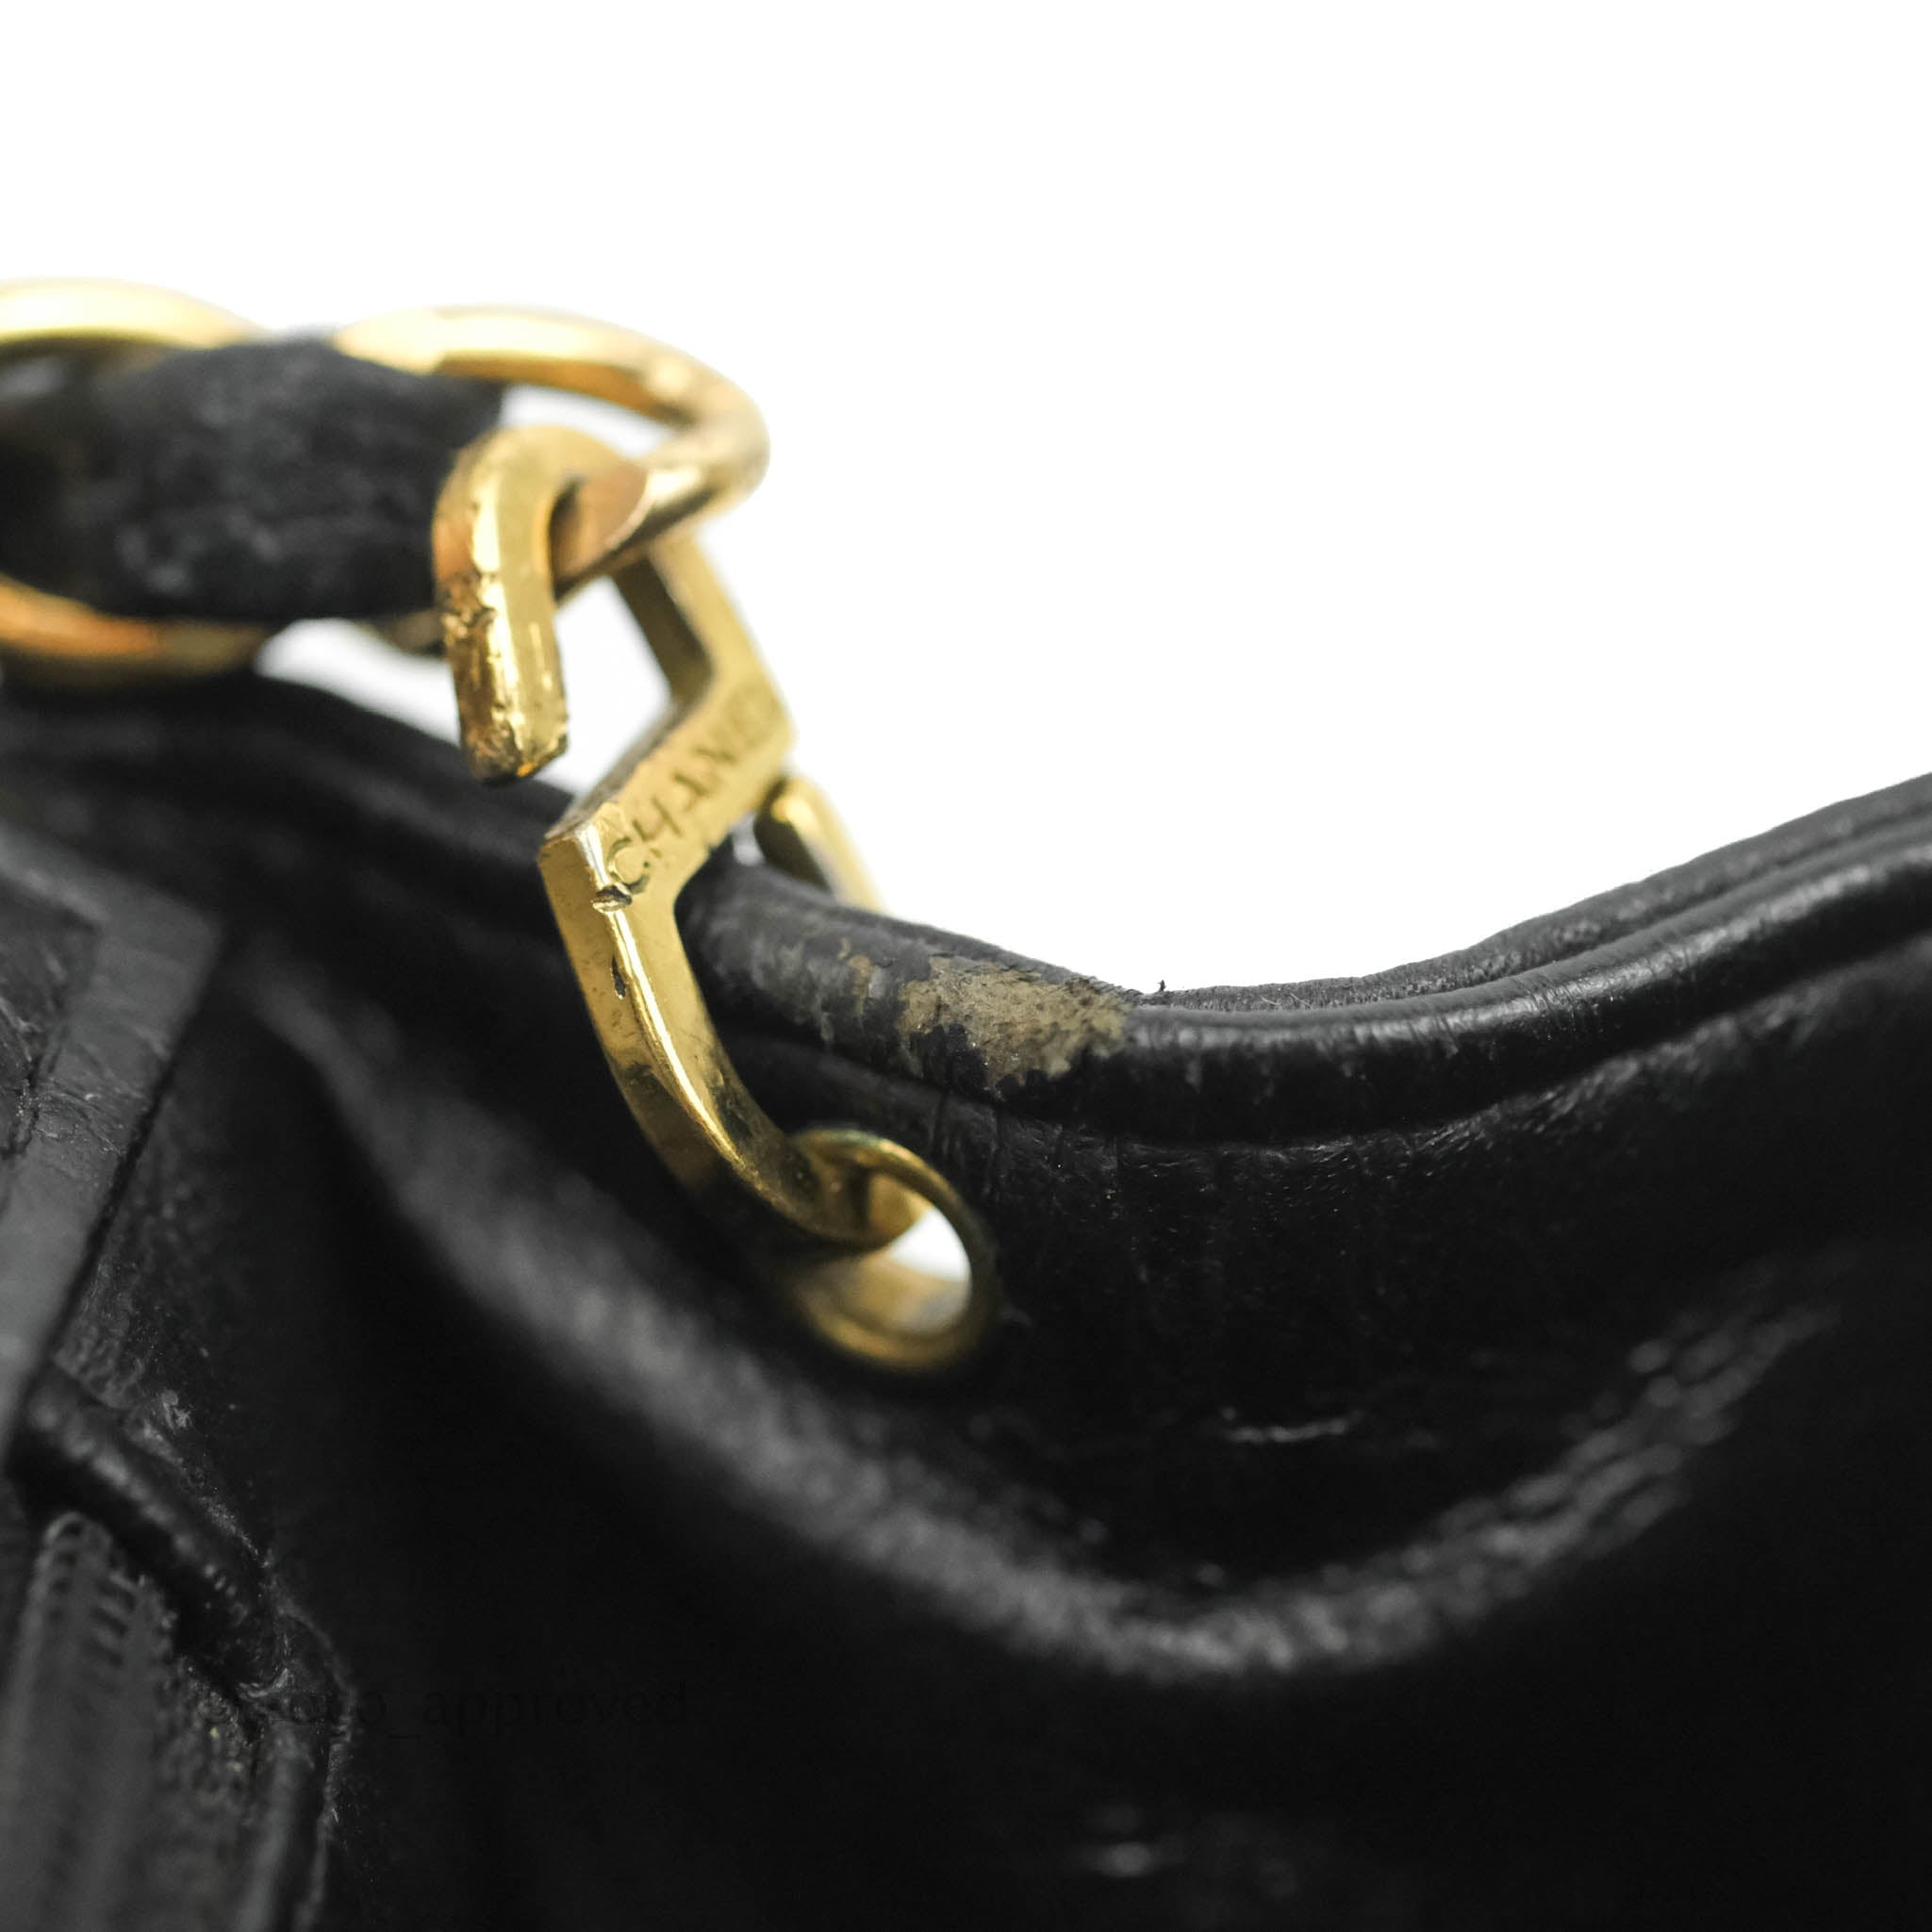 RvceShops Revival, Black Chanel Diana Crossbody Bag